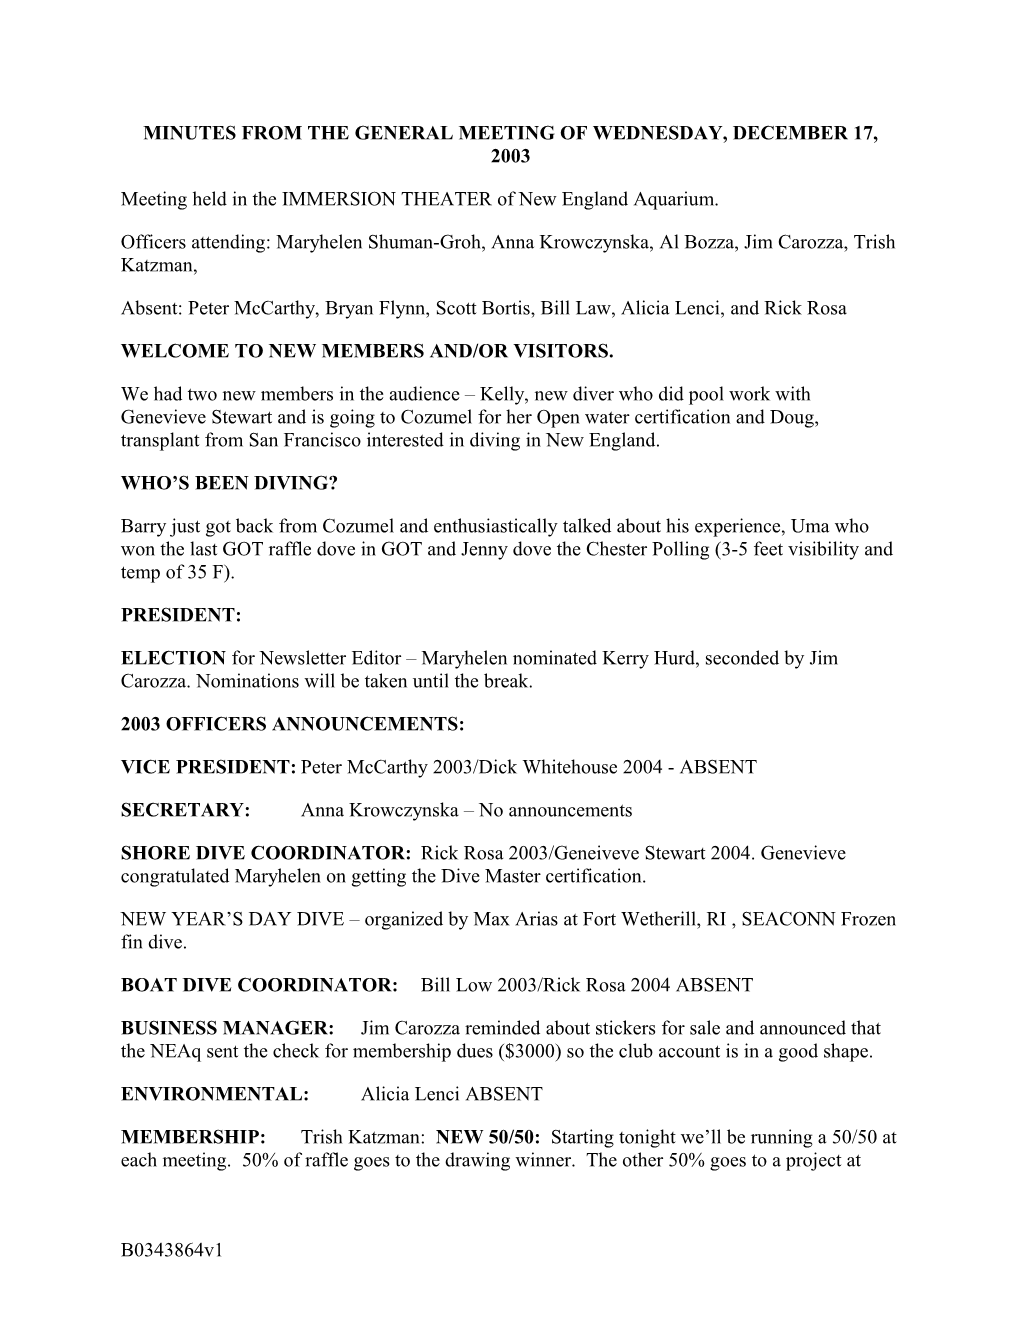 Minutes of December 2003 General Meeting (B0343864;1)